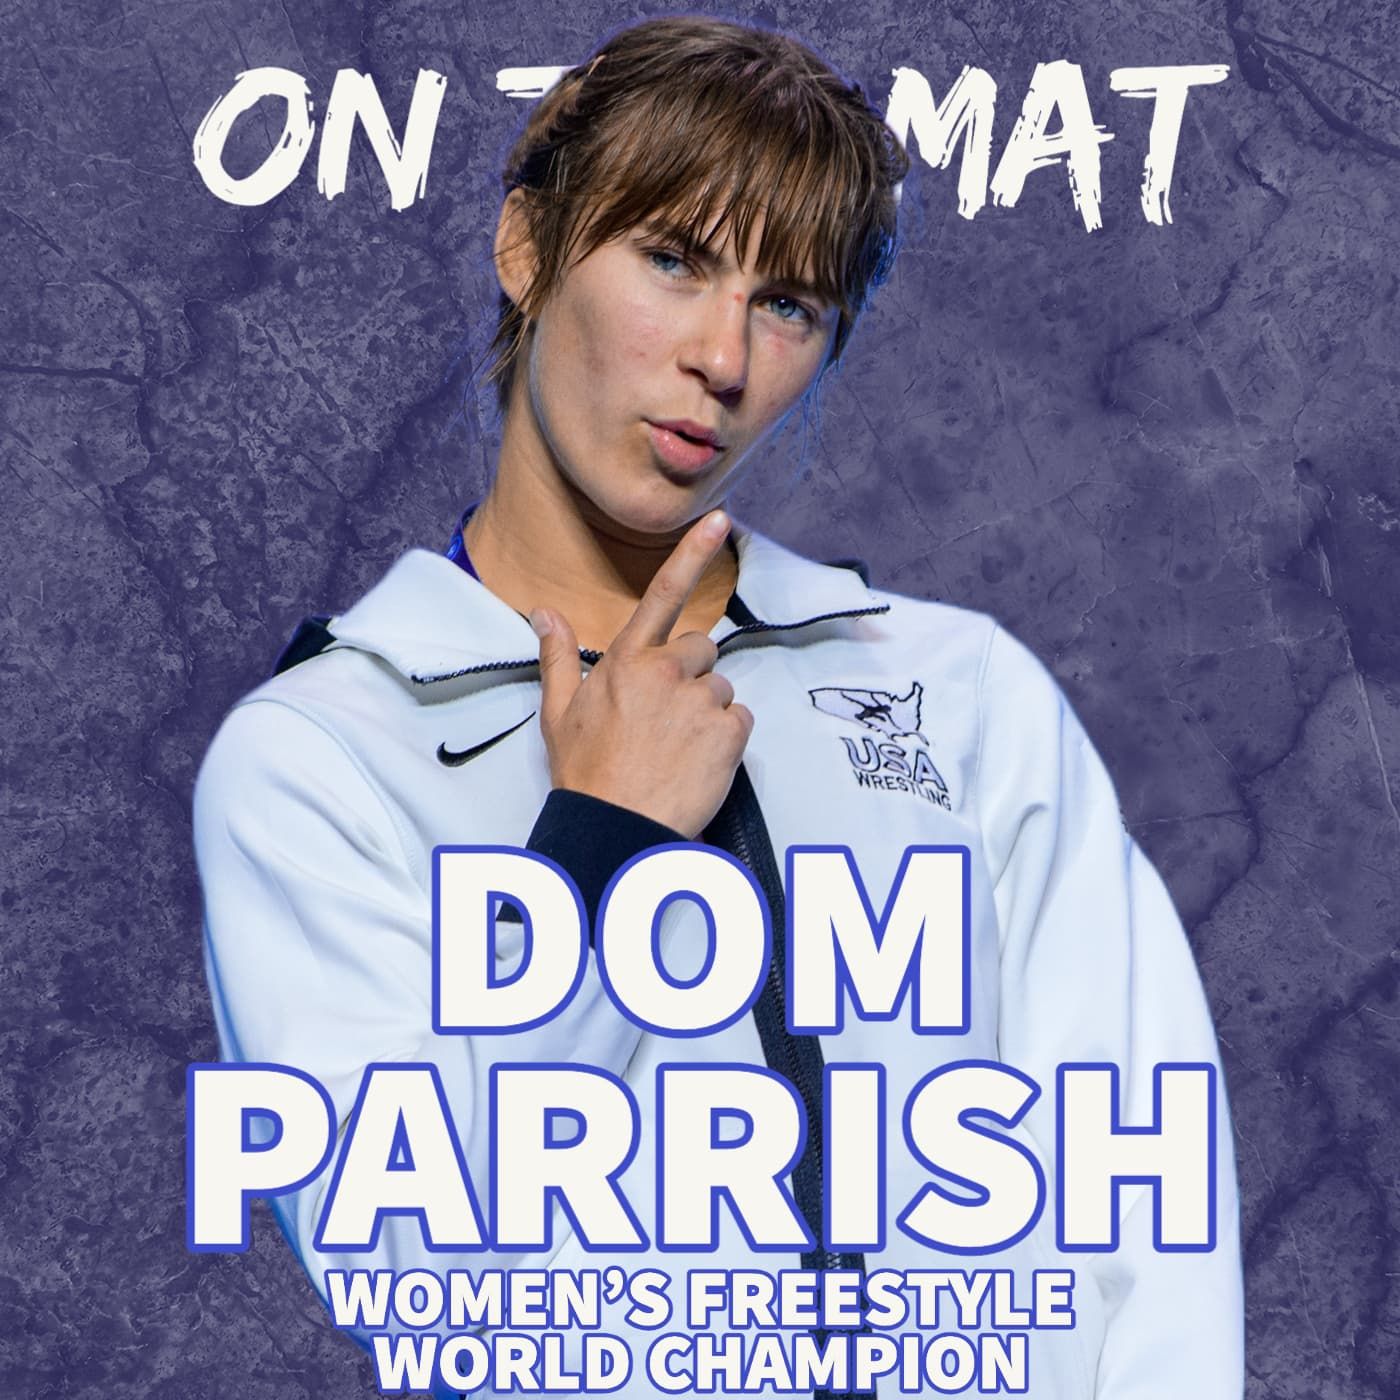 Women’s freestyle world champion Dom Parrish - OTM652